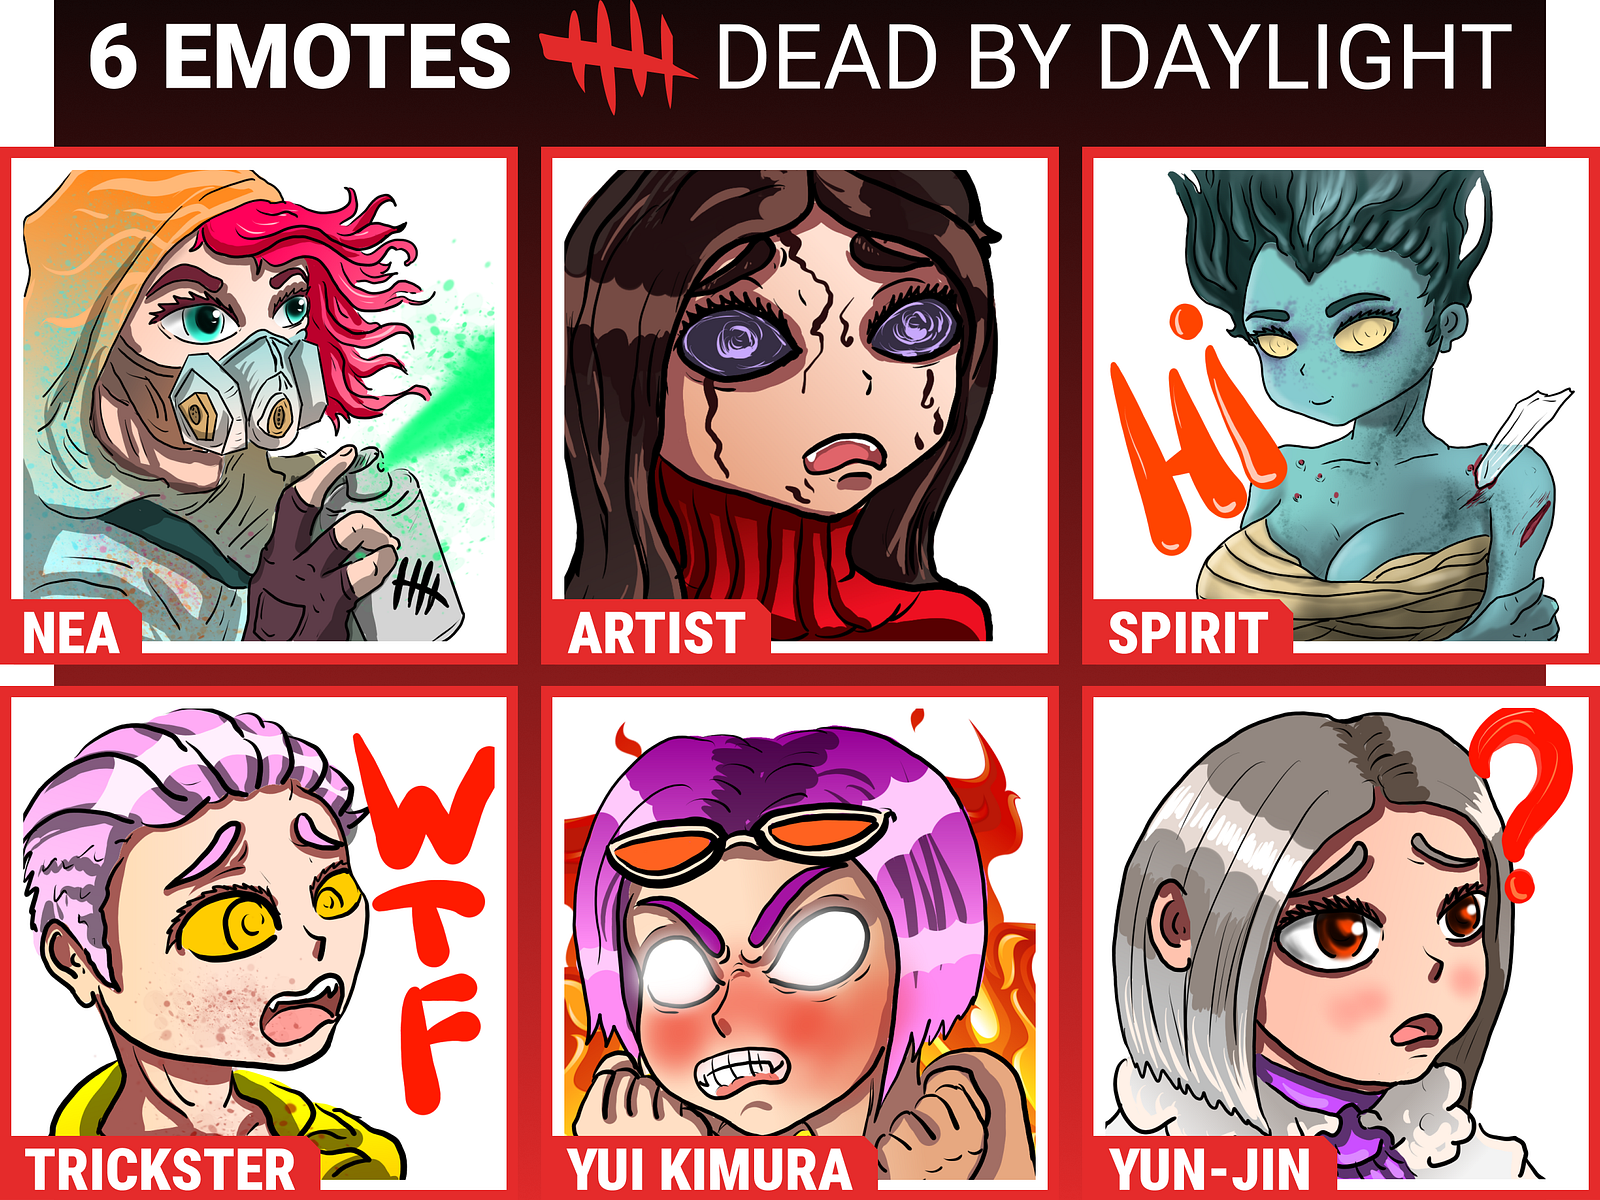 6 Dbd Emote Set 6 Dead By Daylight Twitch Discord Emotes By Nomad Grls On Dribbble